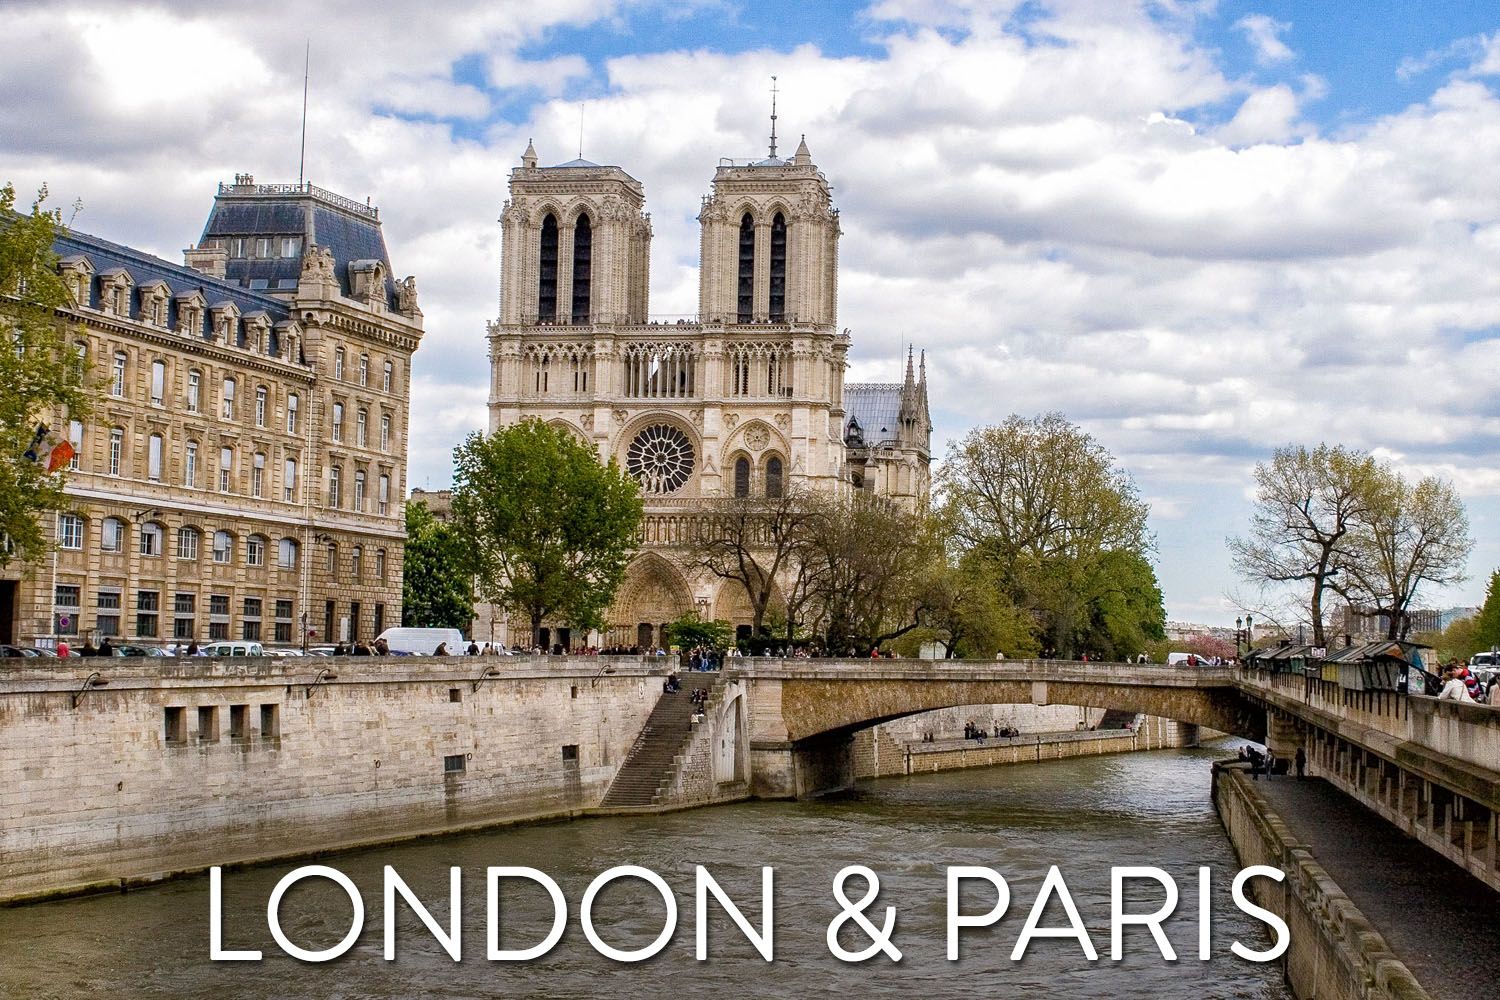 London and Paris